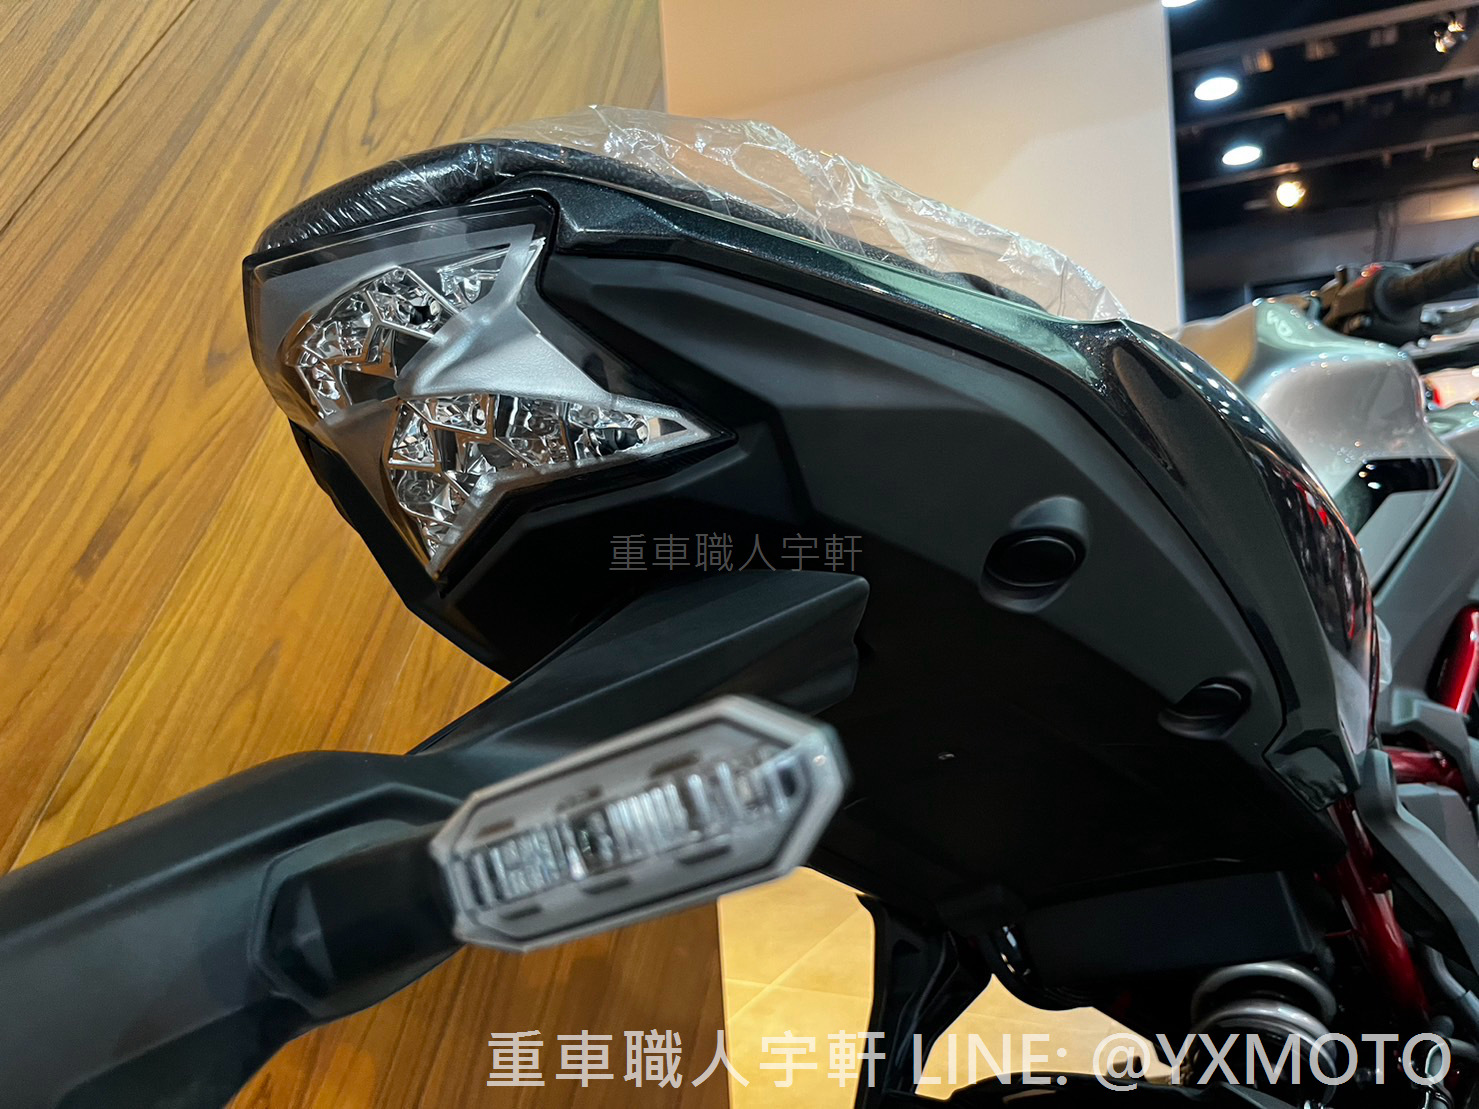 KAWASAKI Z650新車出售中 【敏傑宇軒】Kawasaki Z650 2023 亮銀紅骨 總代理公司車 | 重車銷售職人-宇軒 (敏傑)